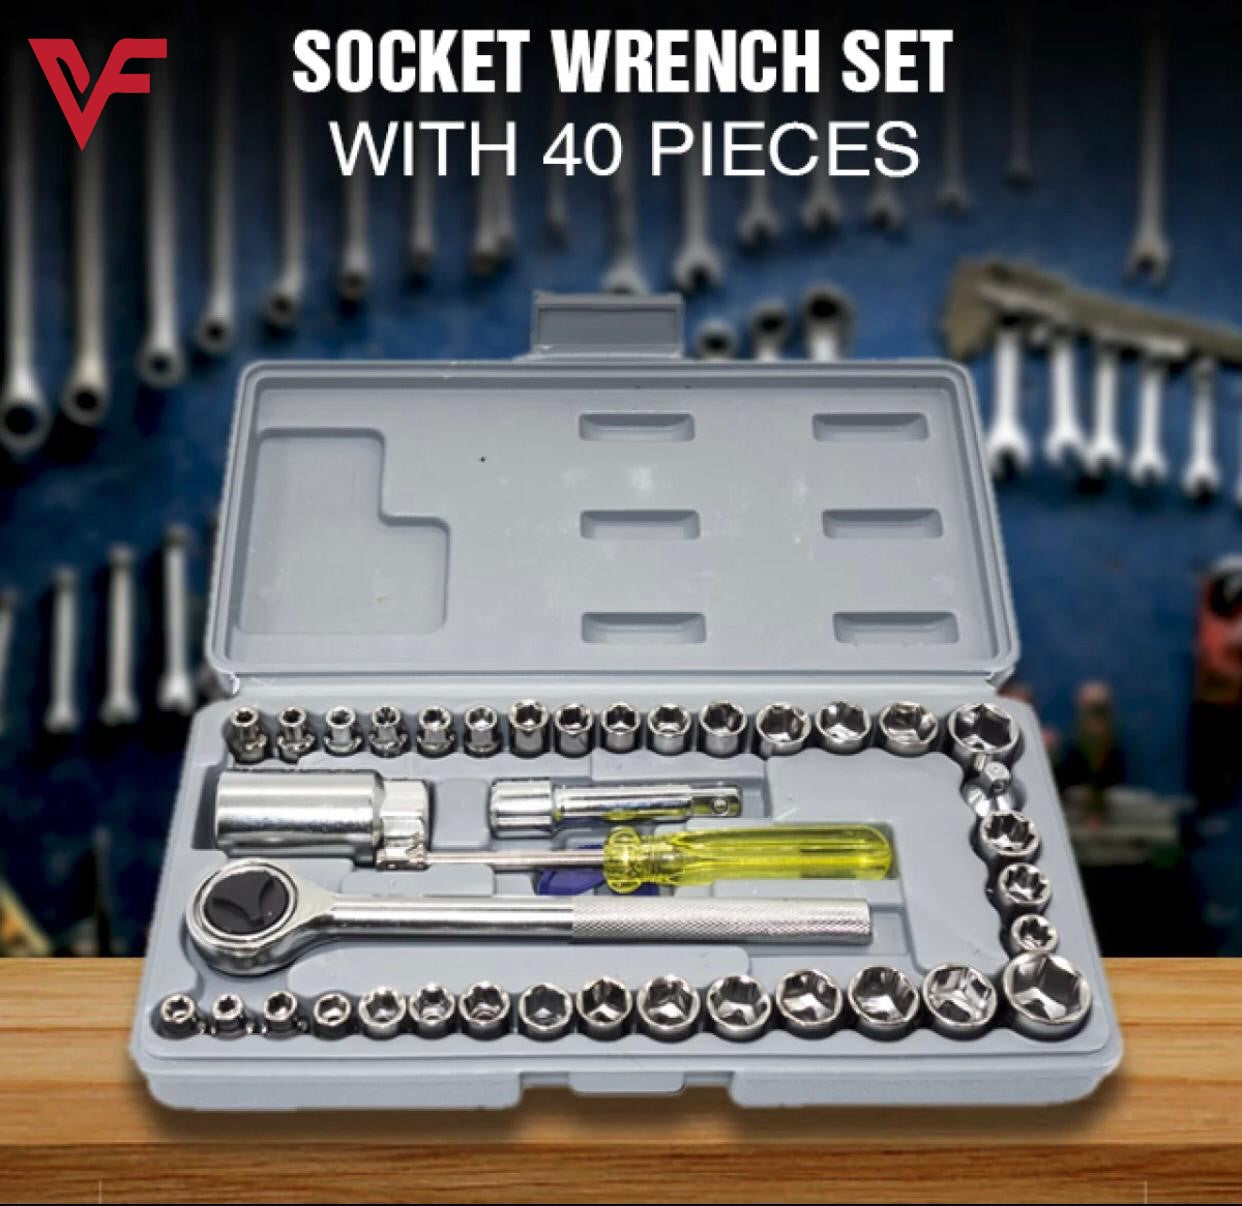 40 Pcs Socket Wrench Set Aiwa Tool Kit AurDekhao.pk